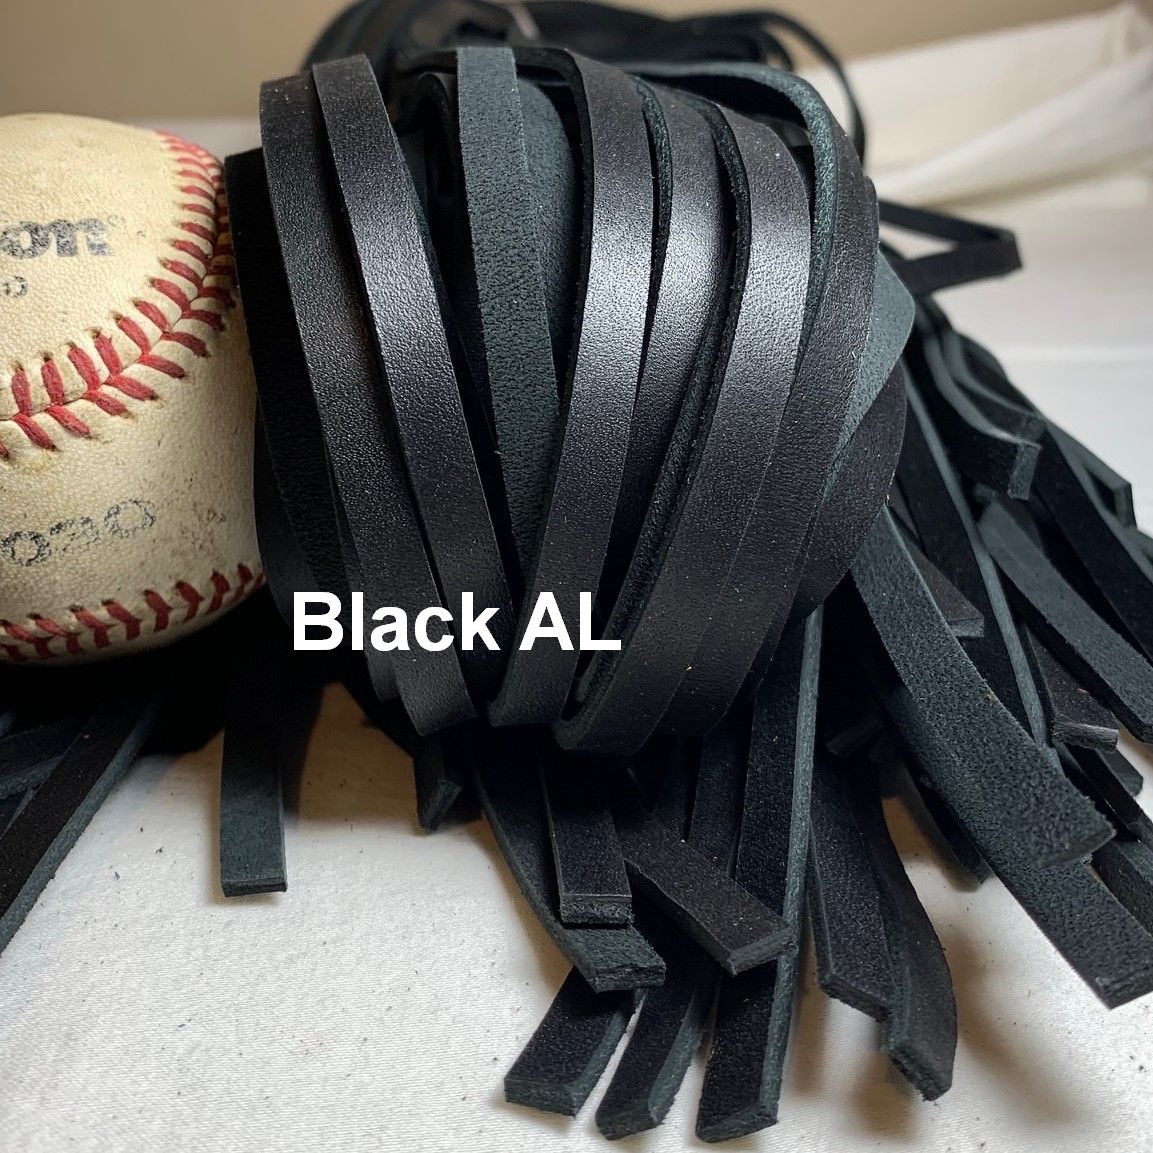 Leather Baseball Glove Lace